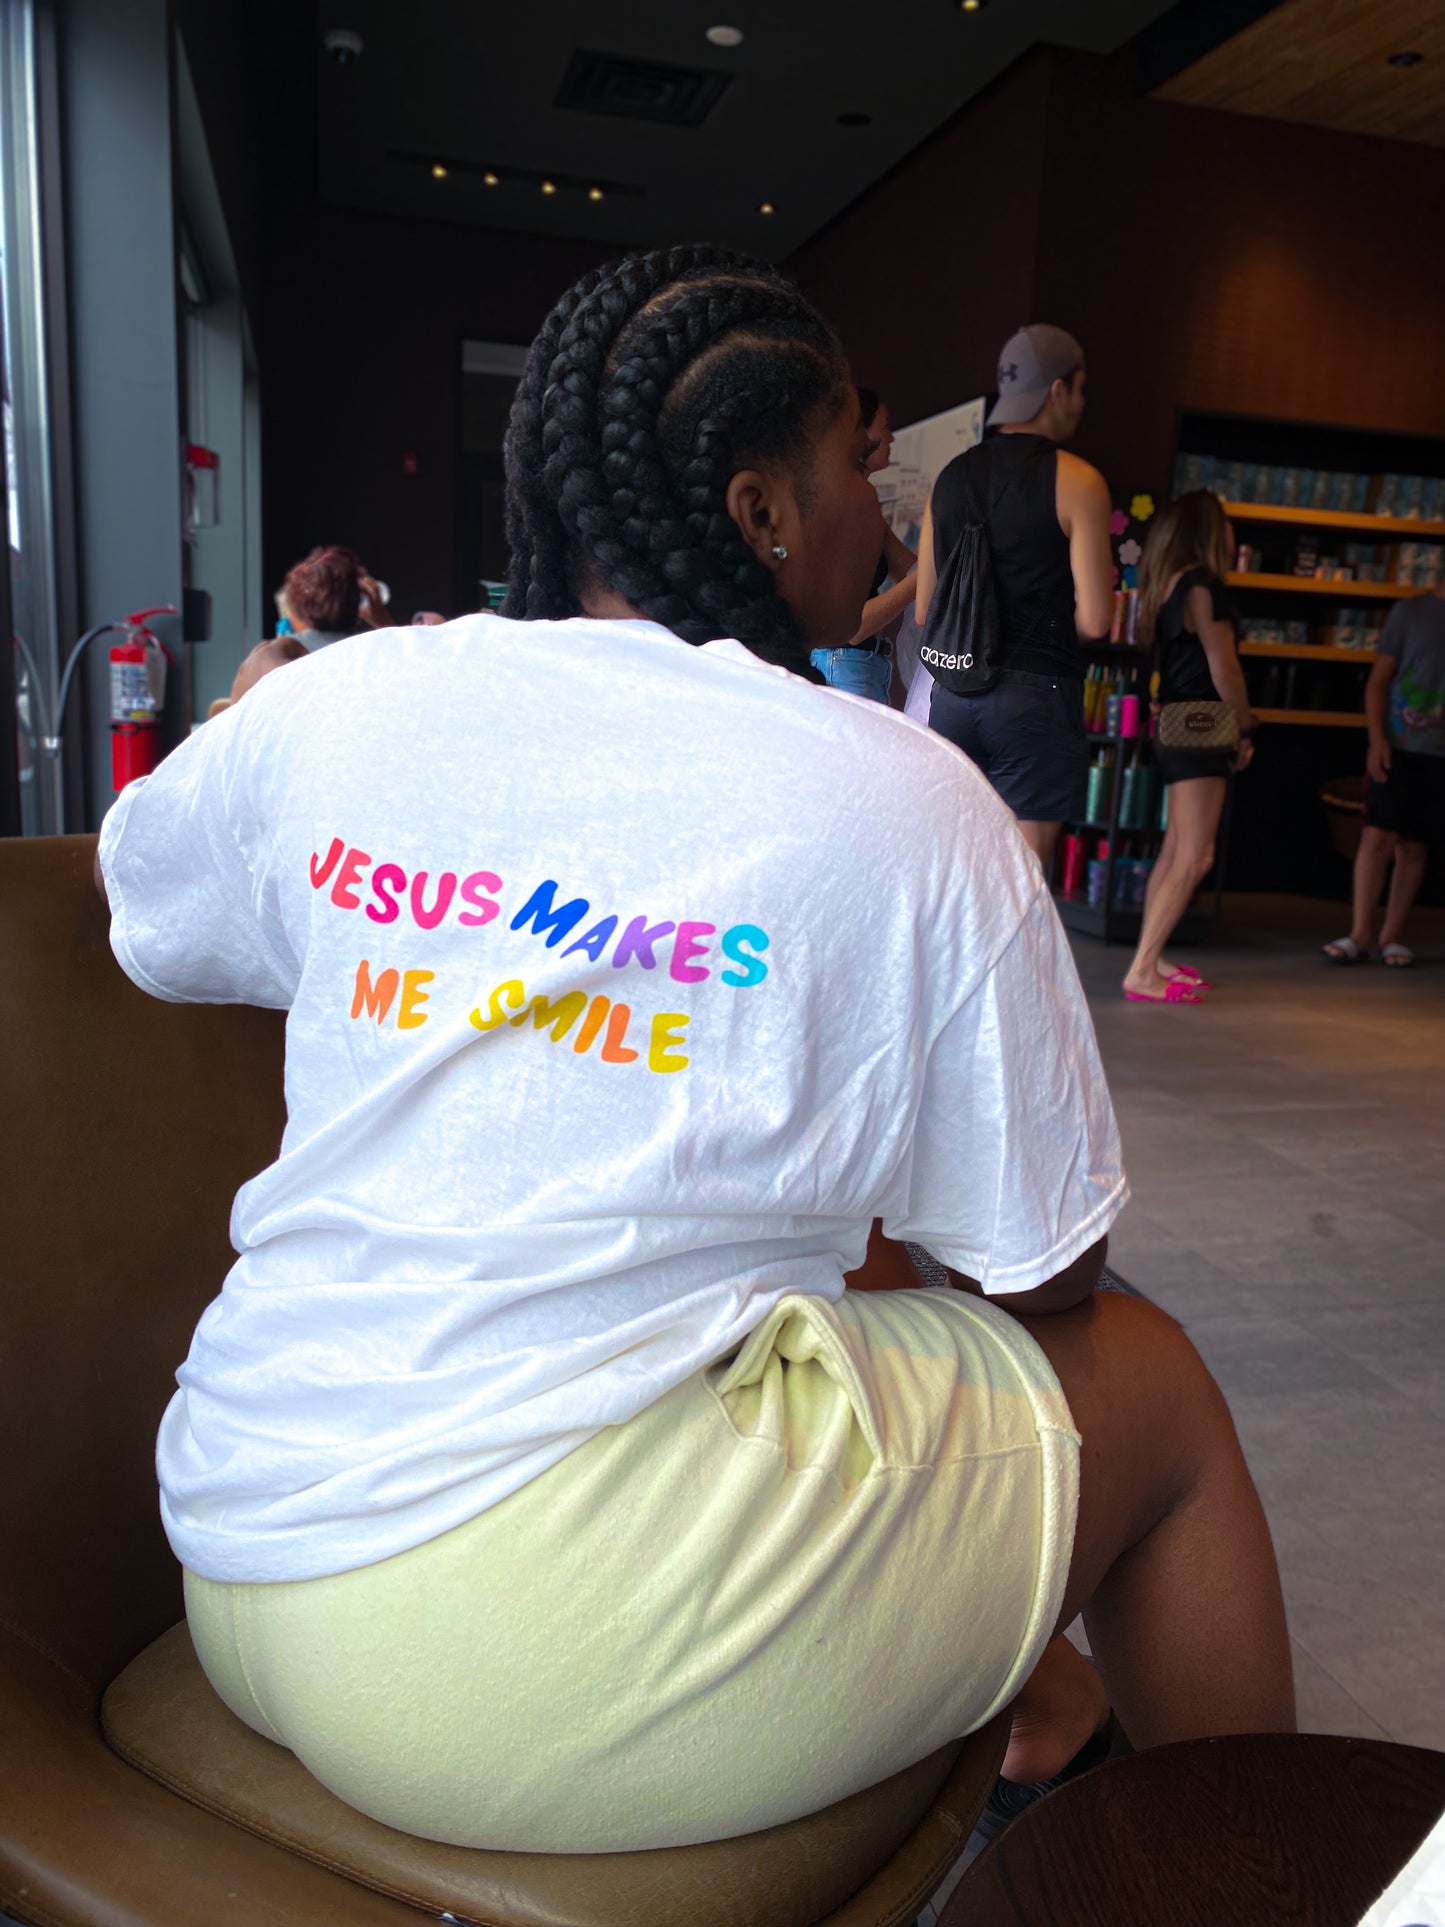 Jesus Makes Me Smile - Shirts & Tops